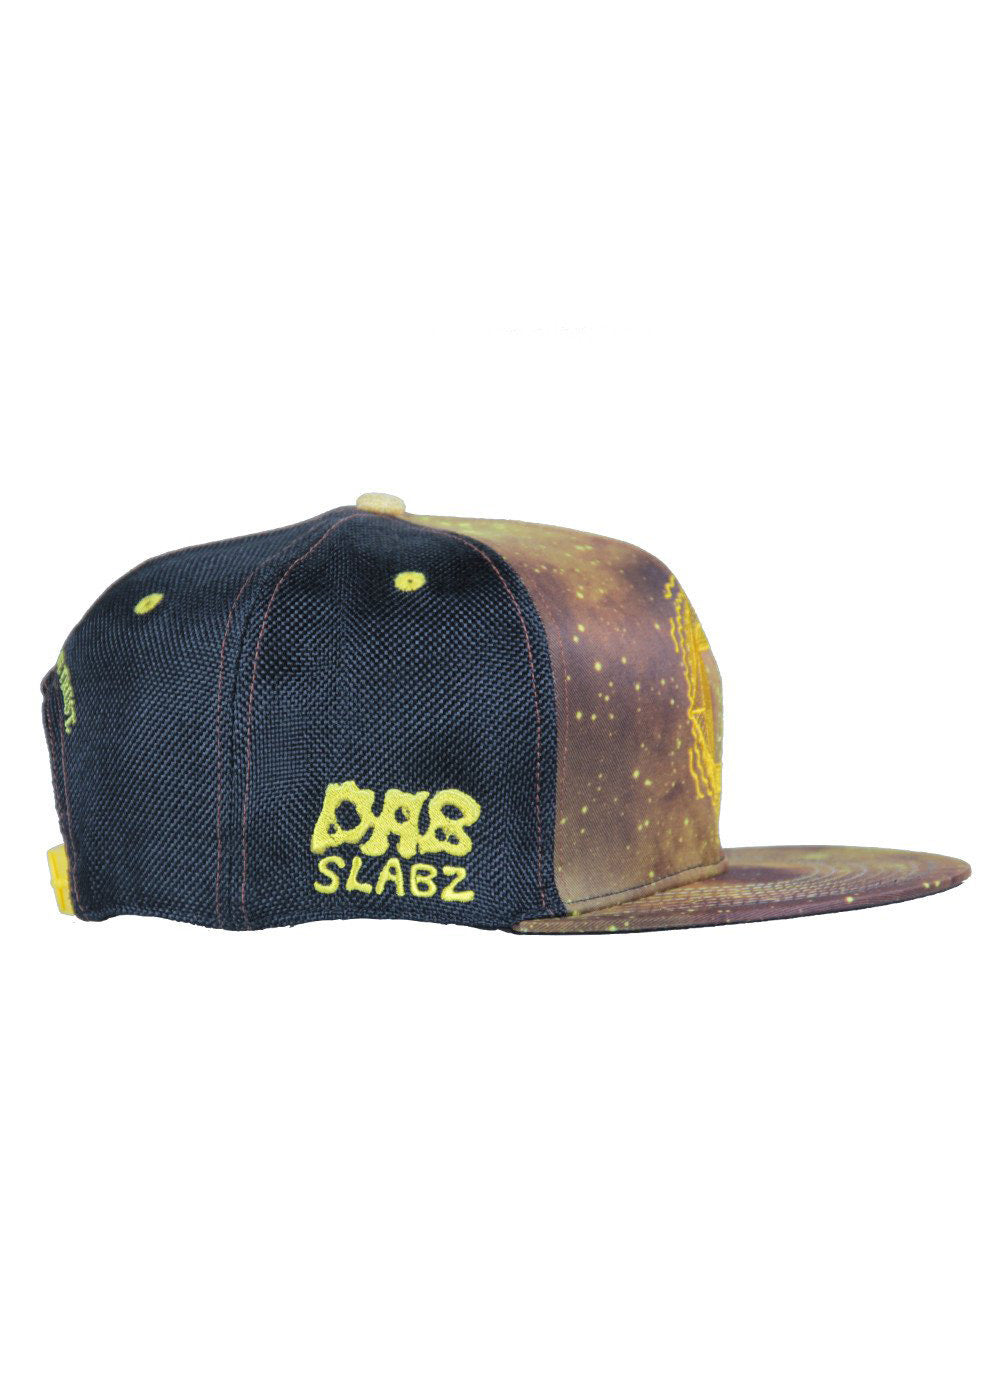 Grassroots Dabslabz 2016 Snapback Hat